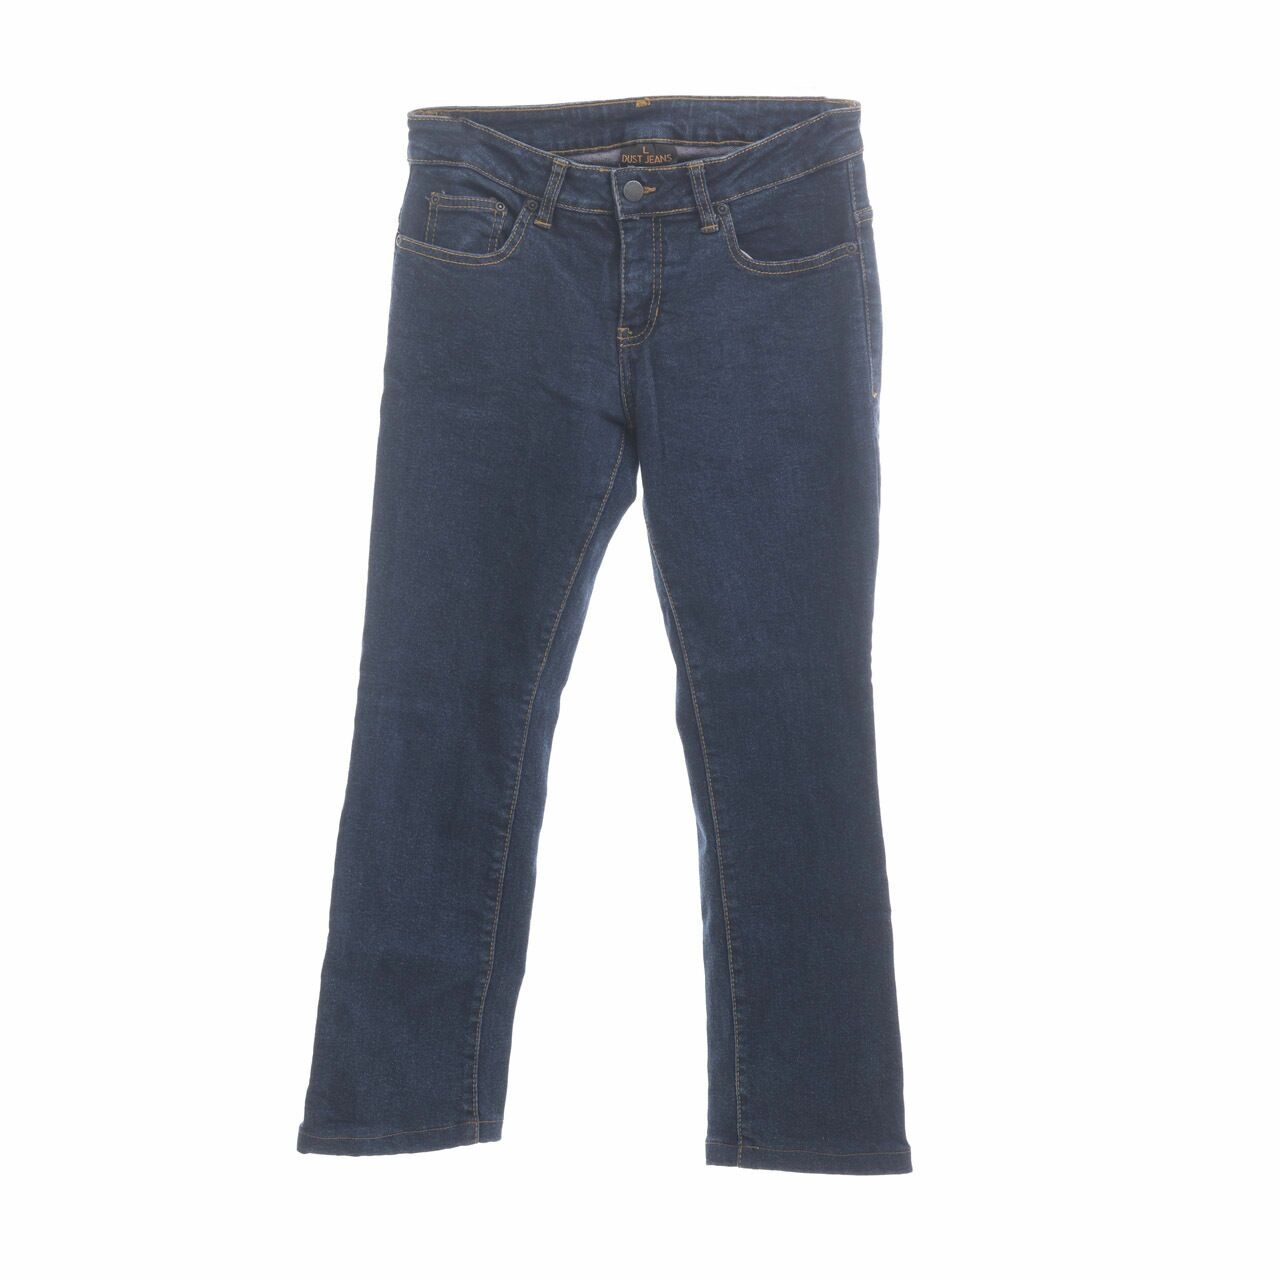 Dust Jeans Dark Blue Denim Long Pants